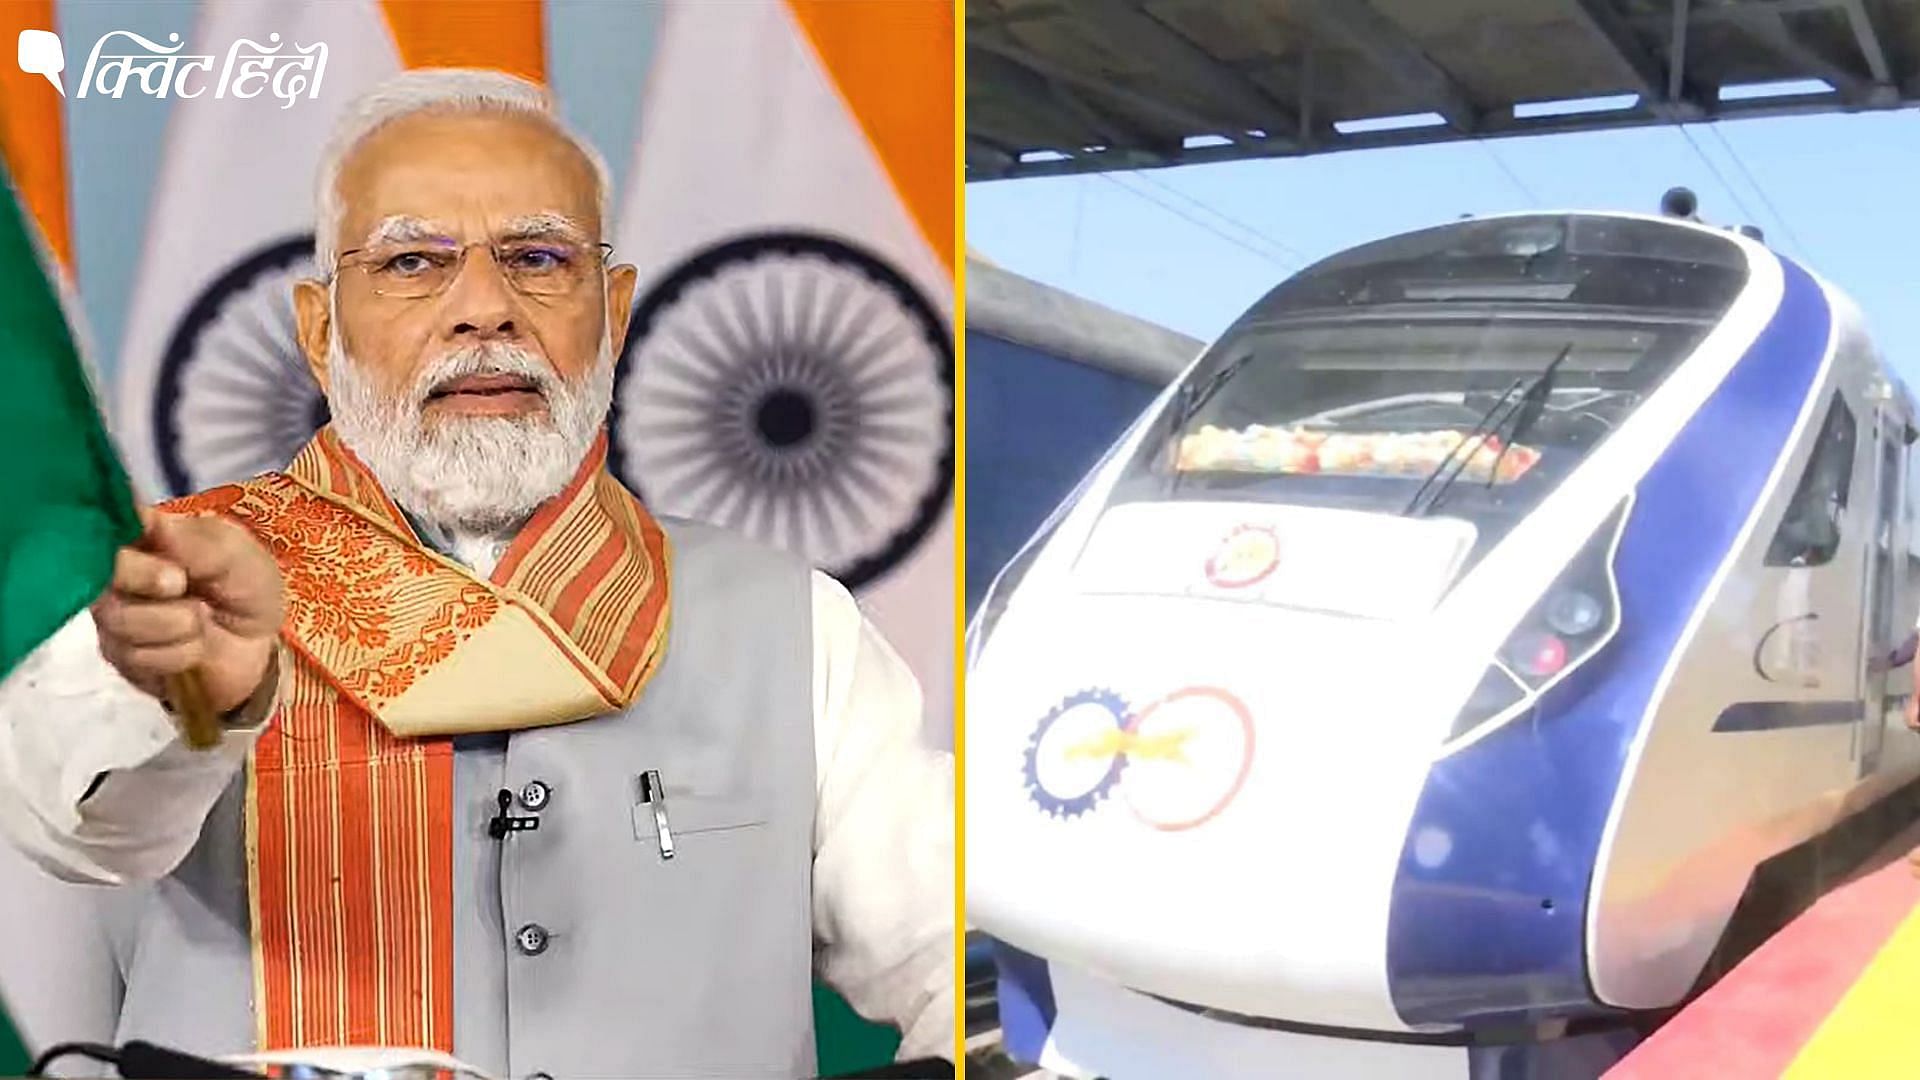 <div class="paragraphs"><p>Vande Bharat: PM मोदी ने दी 10 नई वंदे भारत ट्रेन की सौगात, इन रूट्स पर संचालन</p></div>